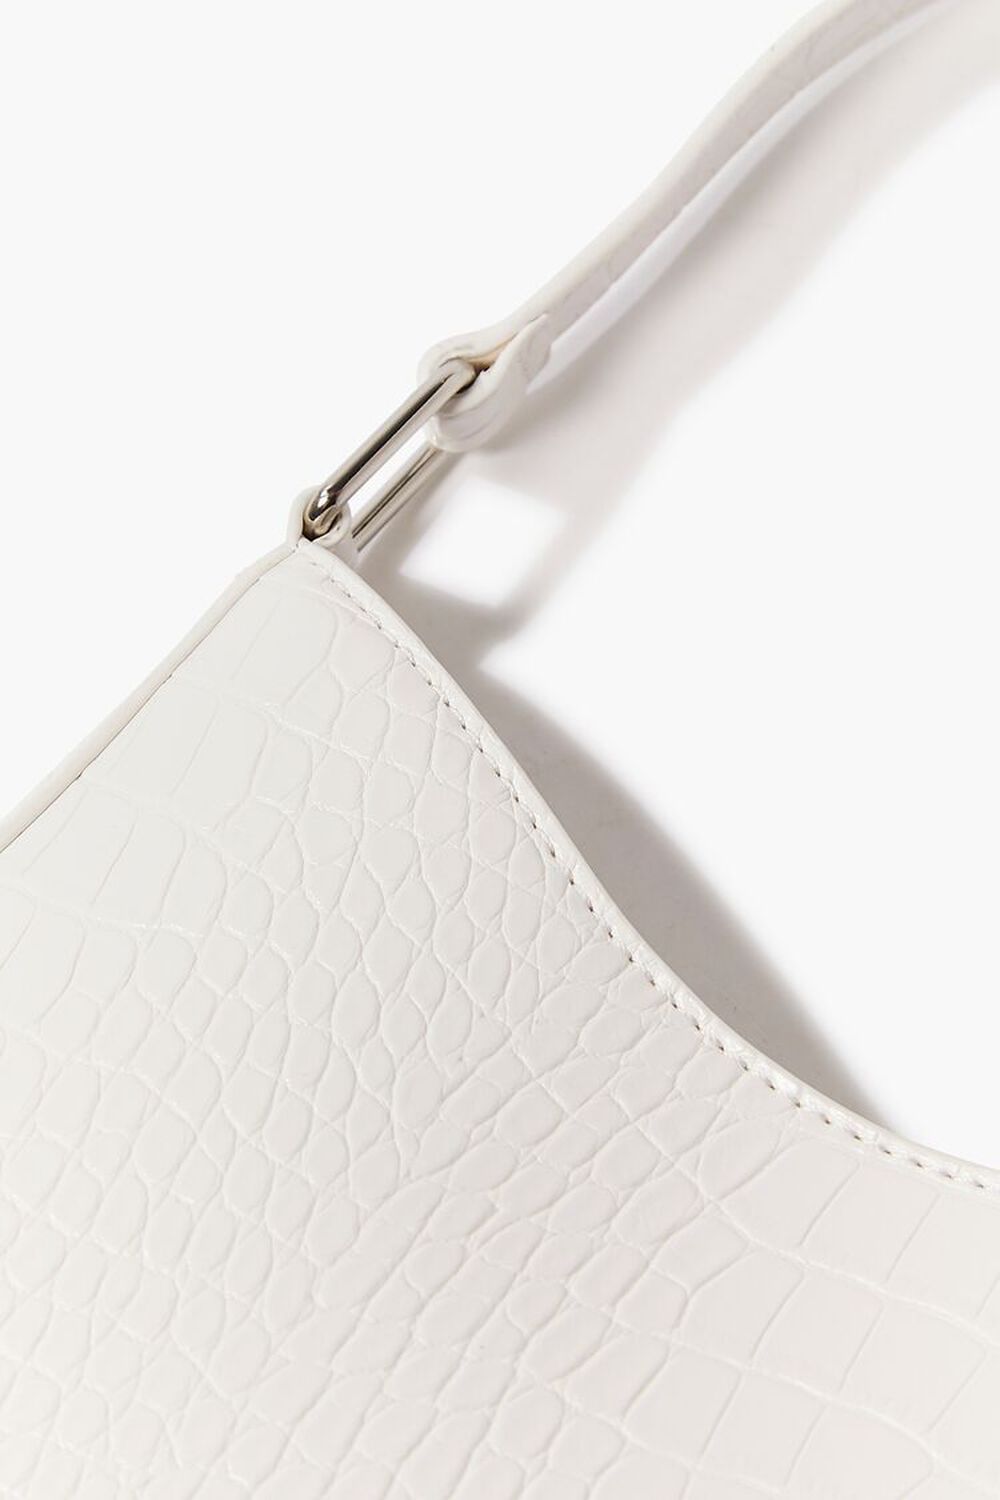 WHITE Faux Croc Leather Shoulder Bag, image 3